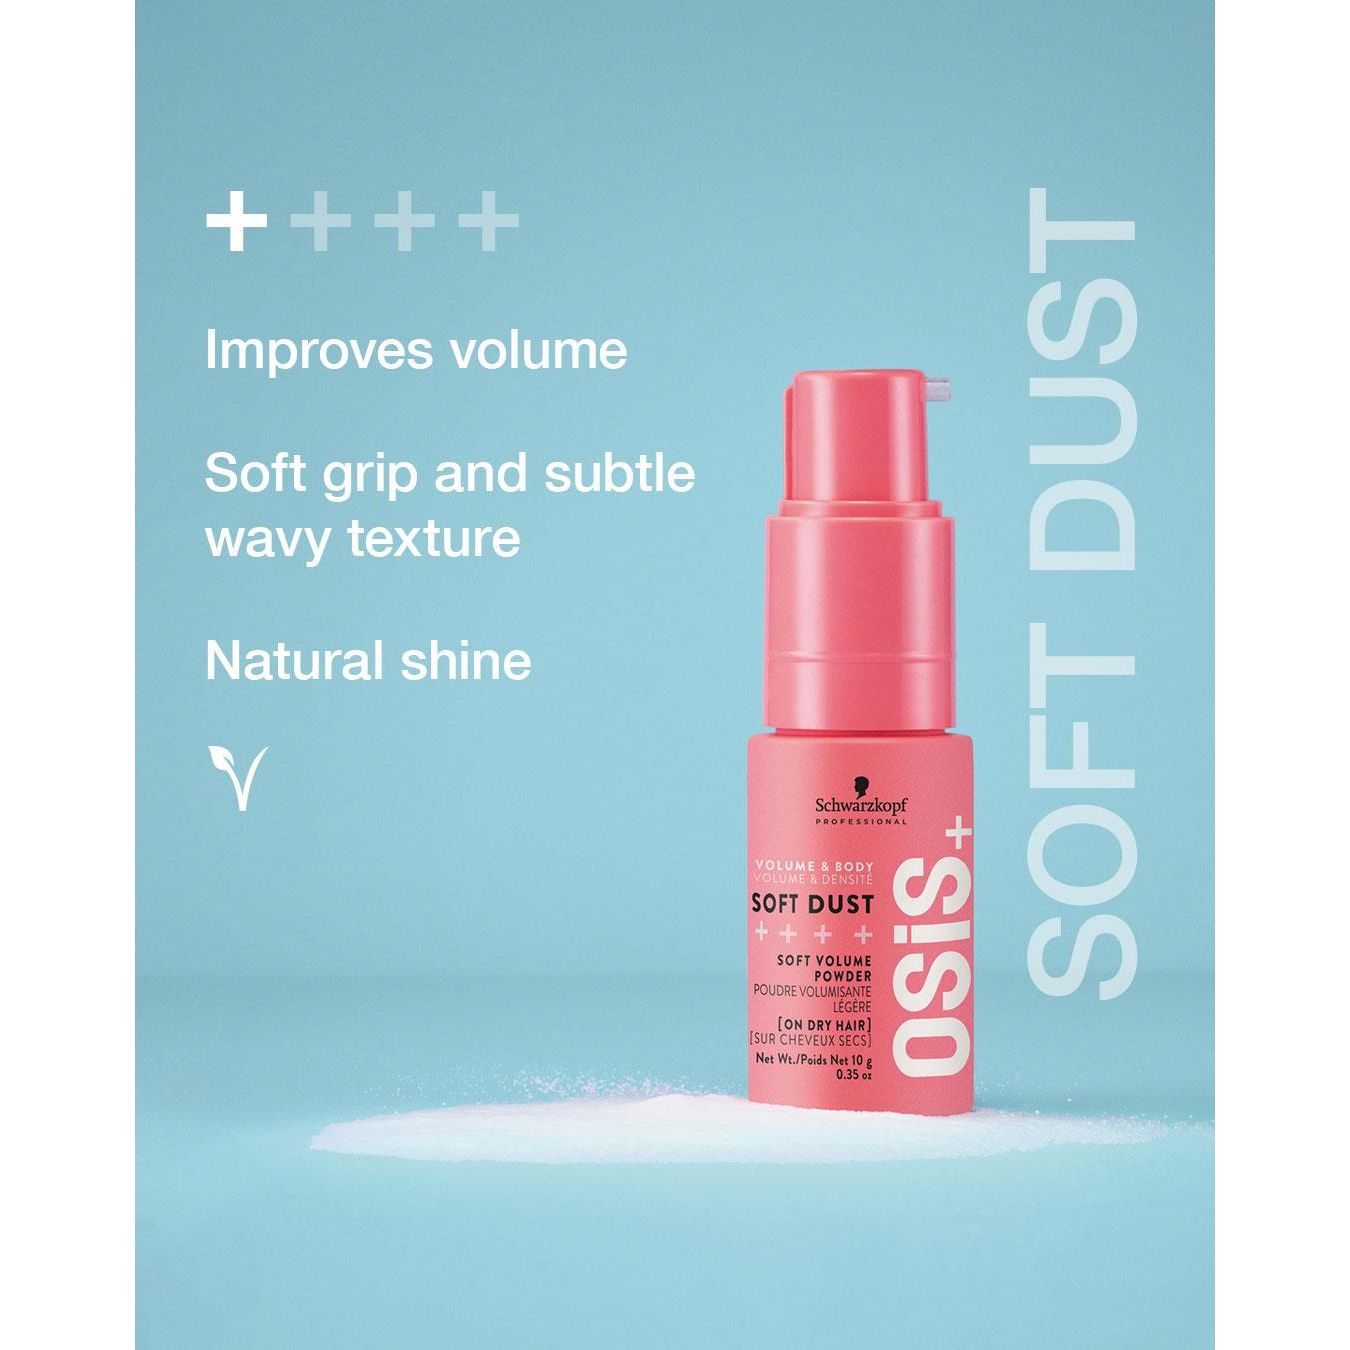 OSiS Soft Dust - 10g 2